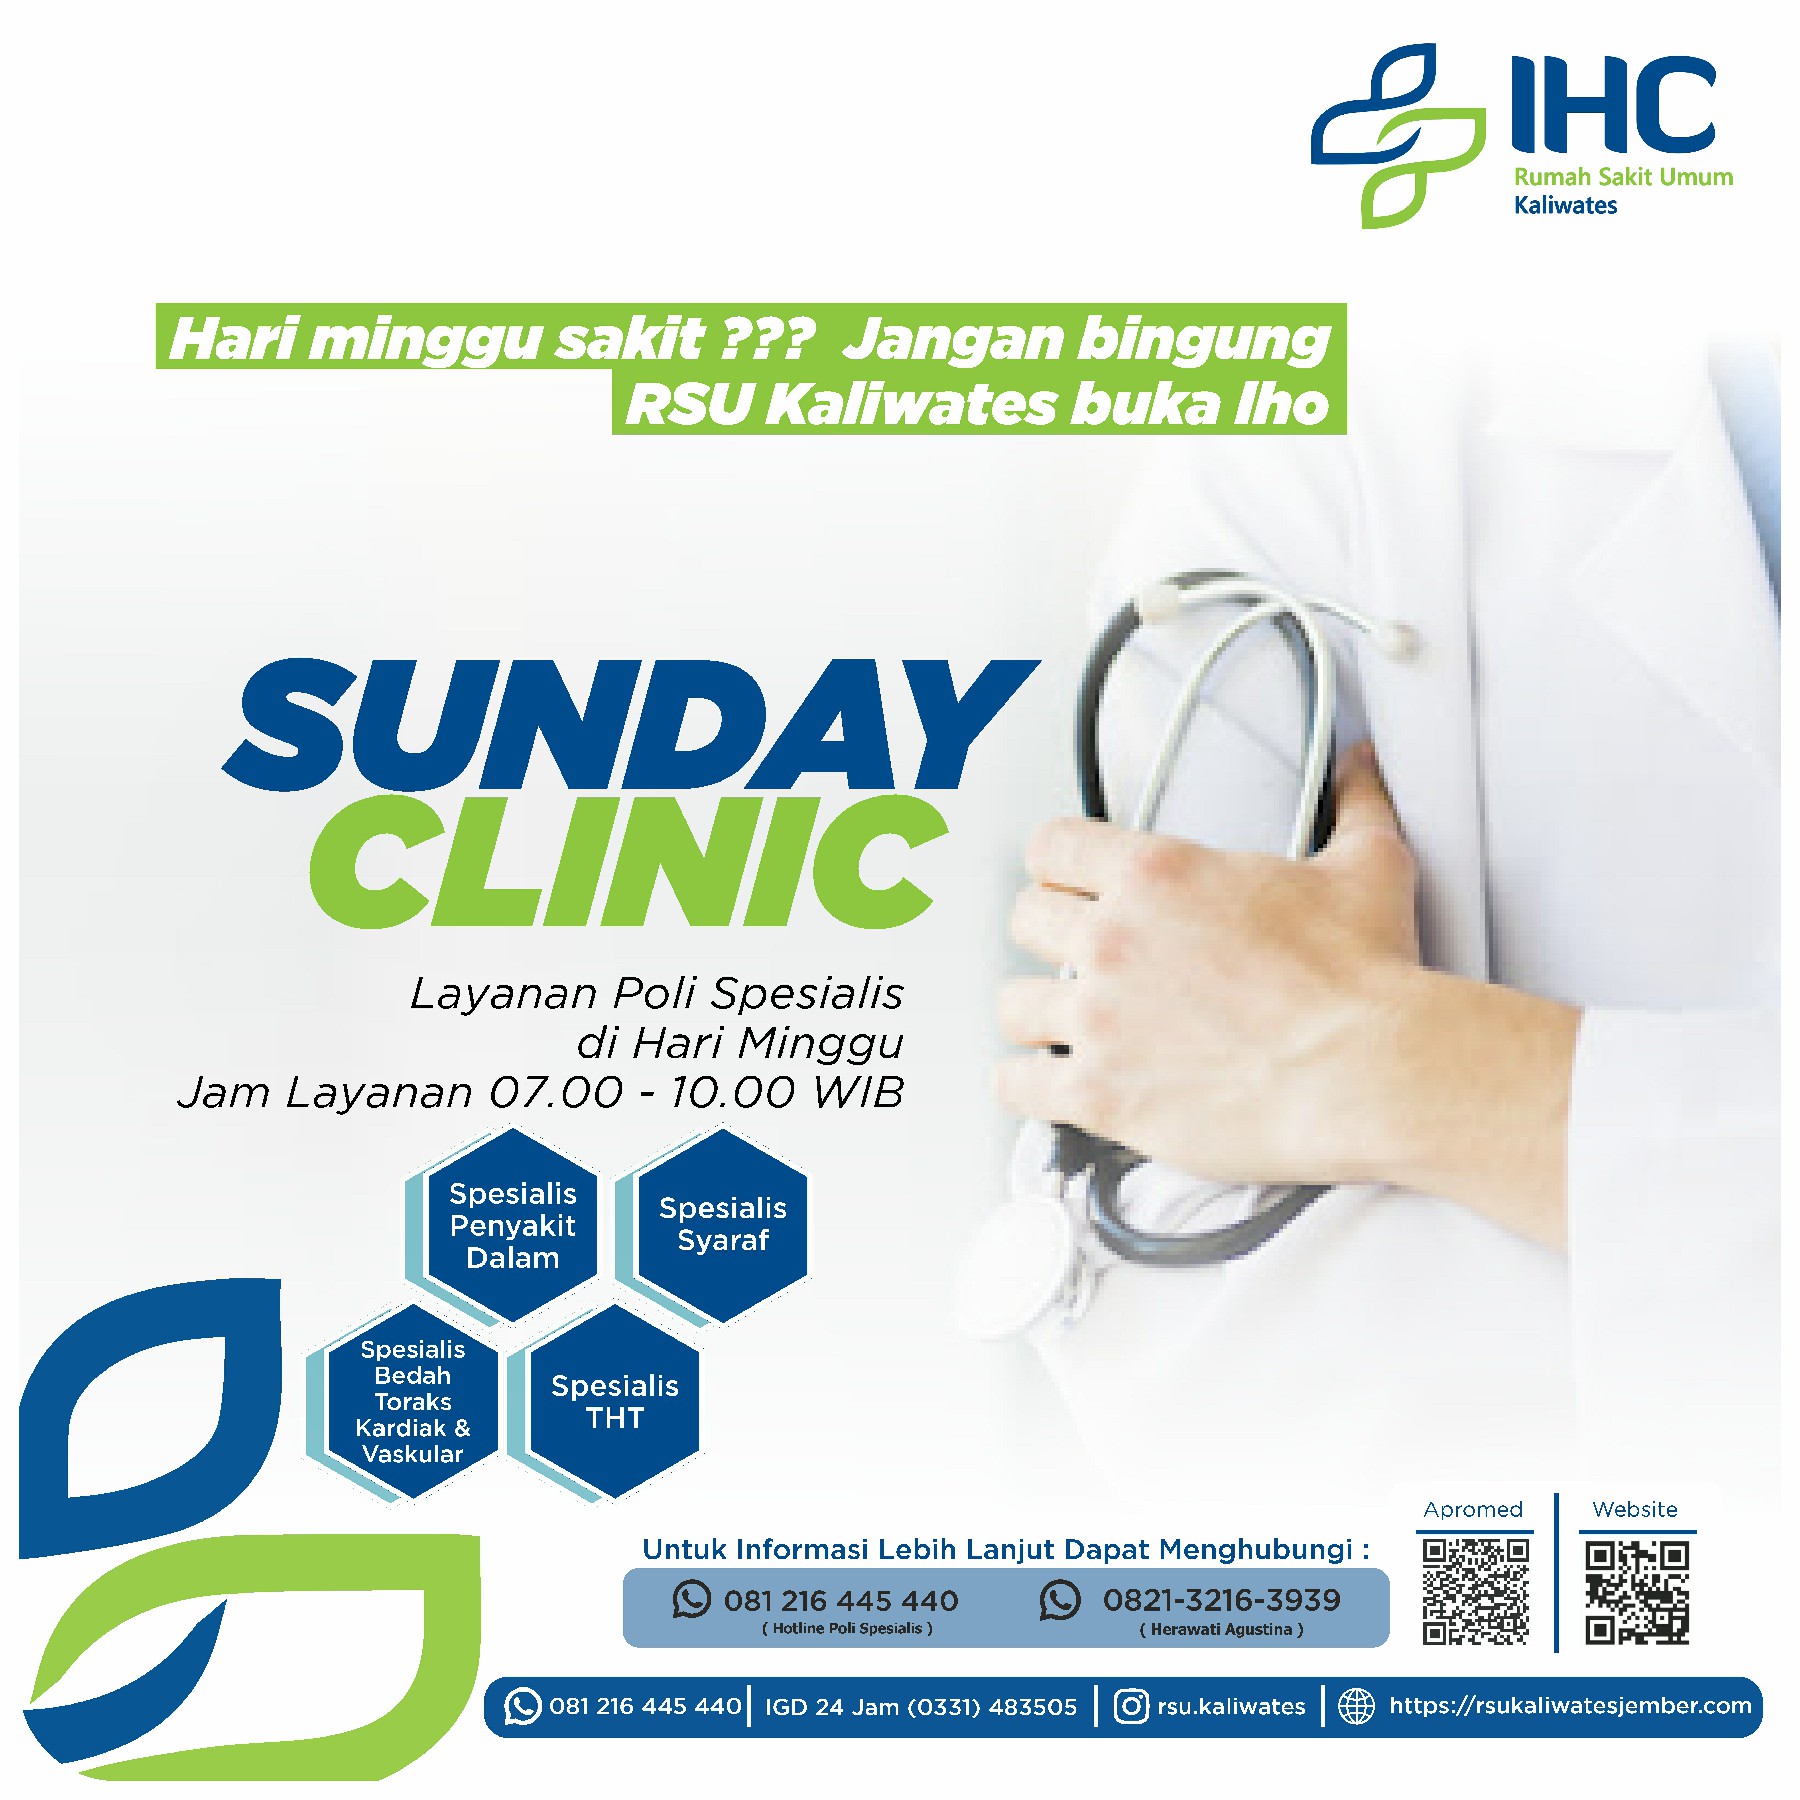 Sunday clinic